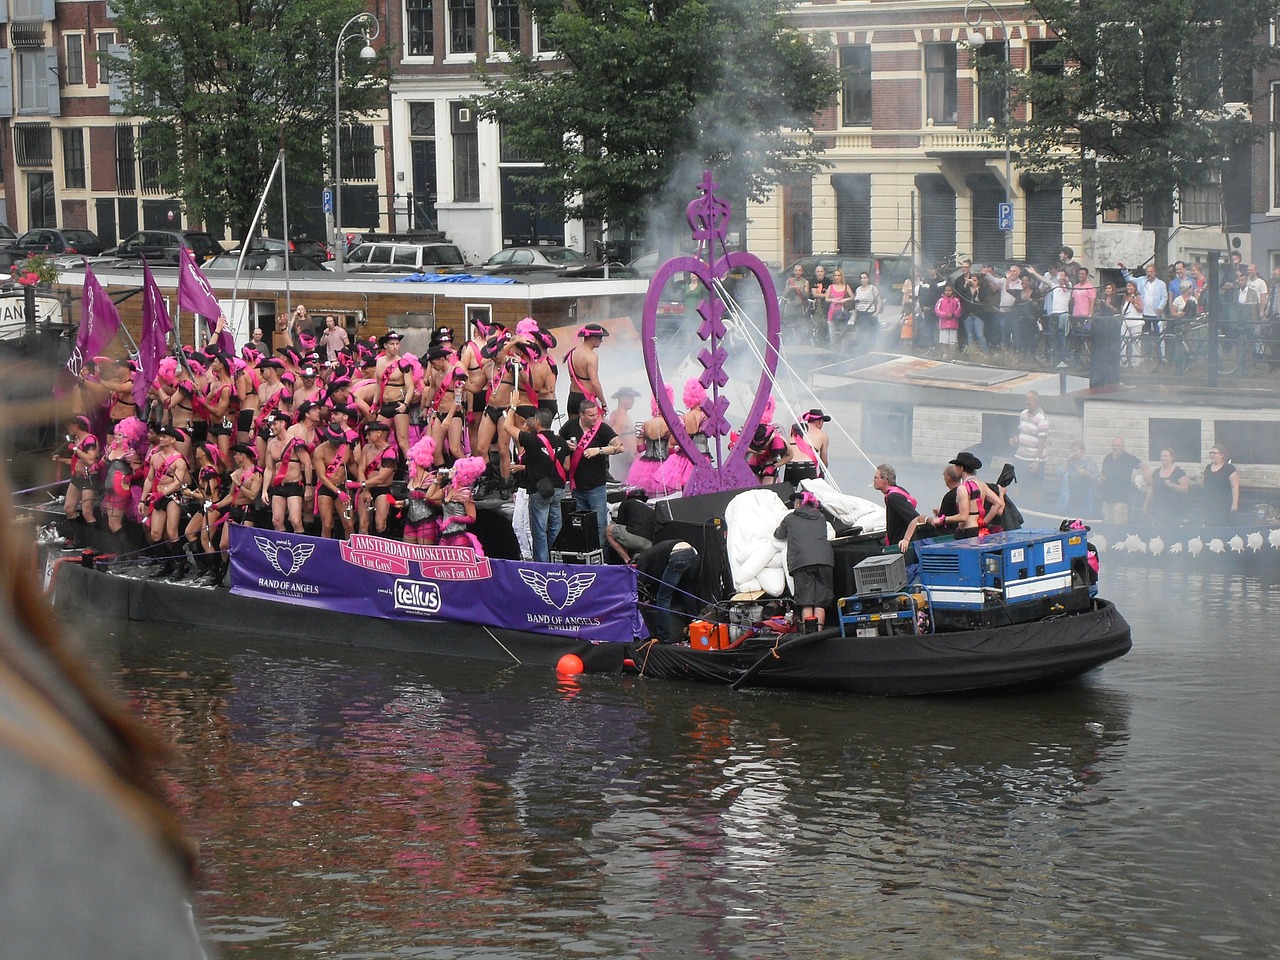 gay parade beaten up amsterdam party free photo